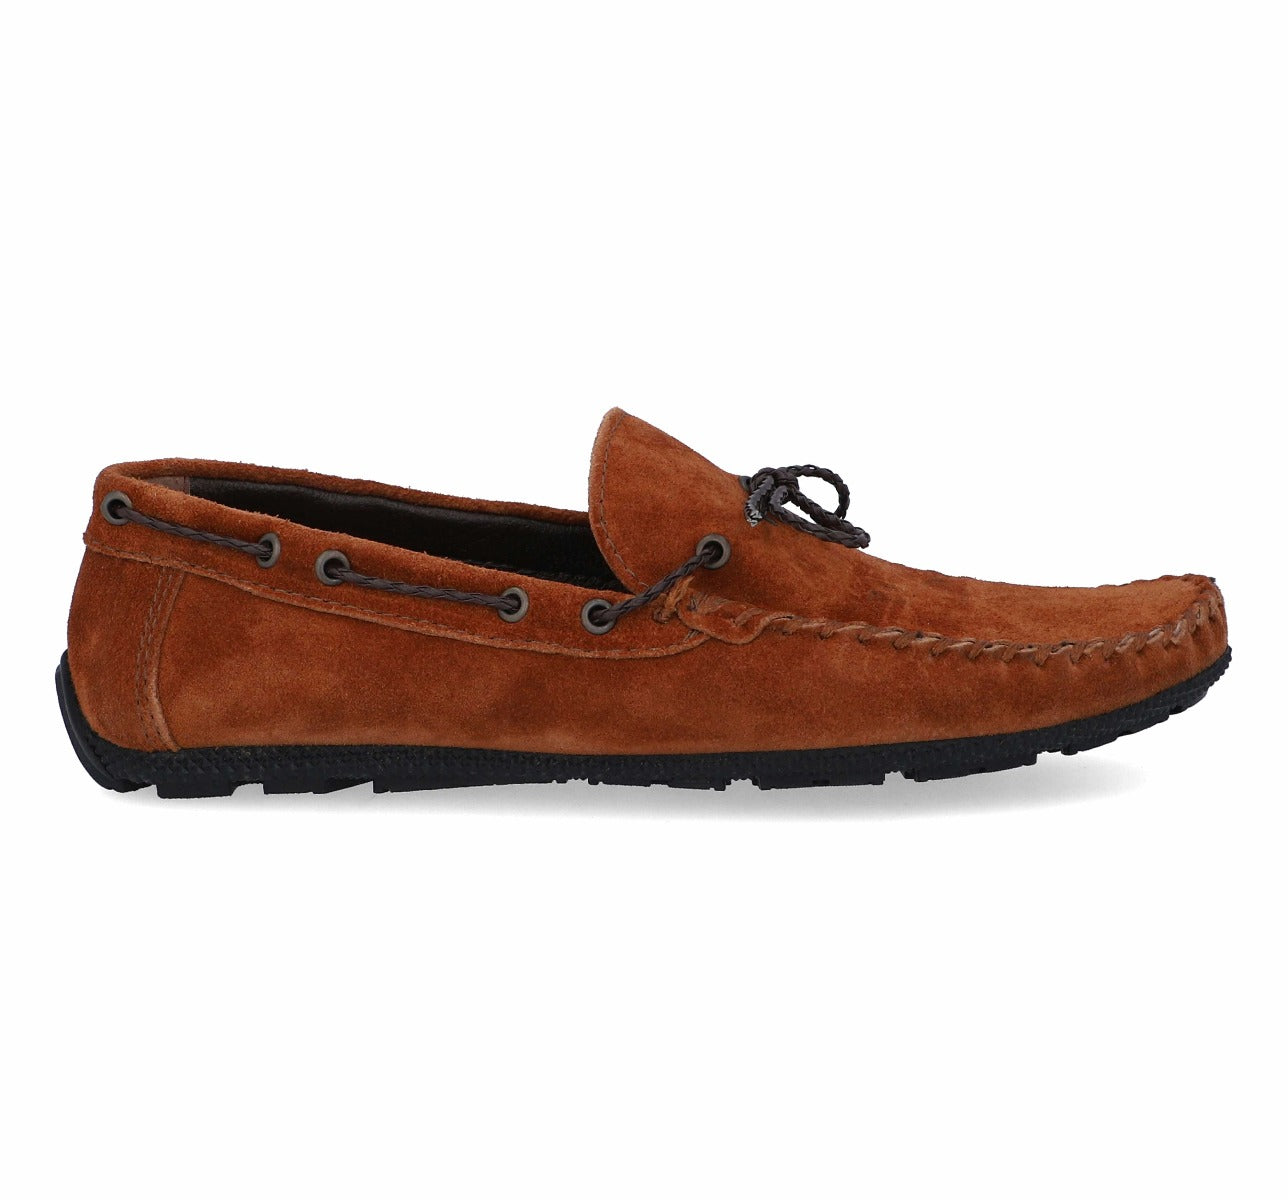 Barefoot Brown Loafers Slip On For Men 1010-BR